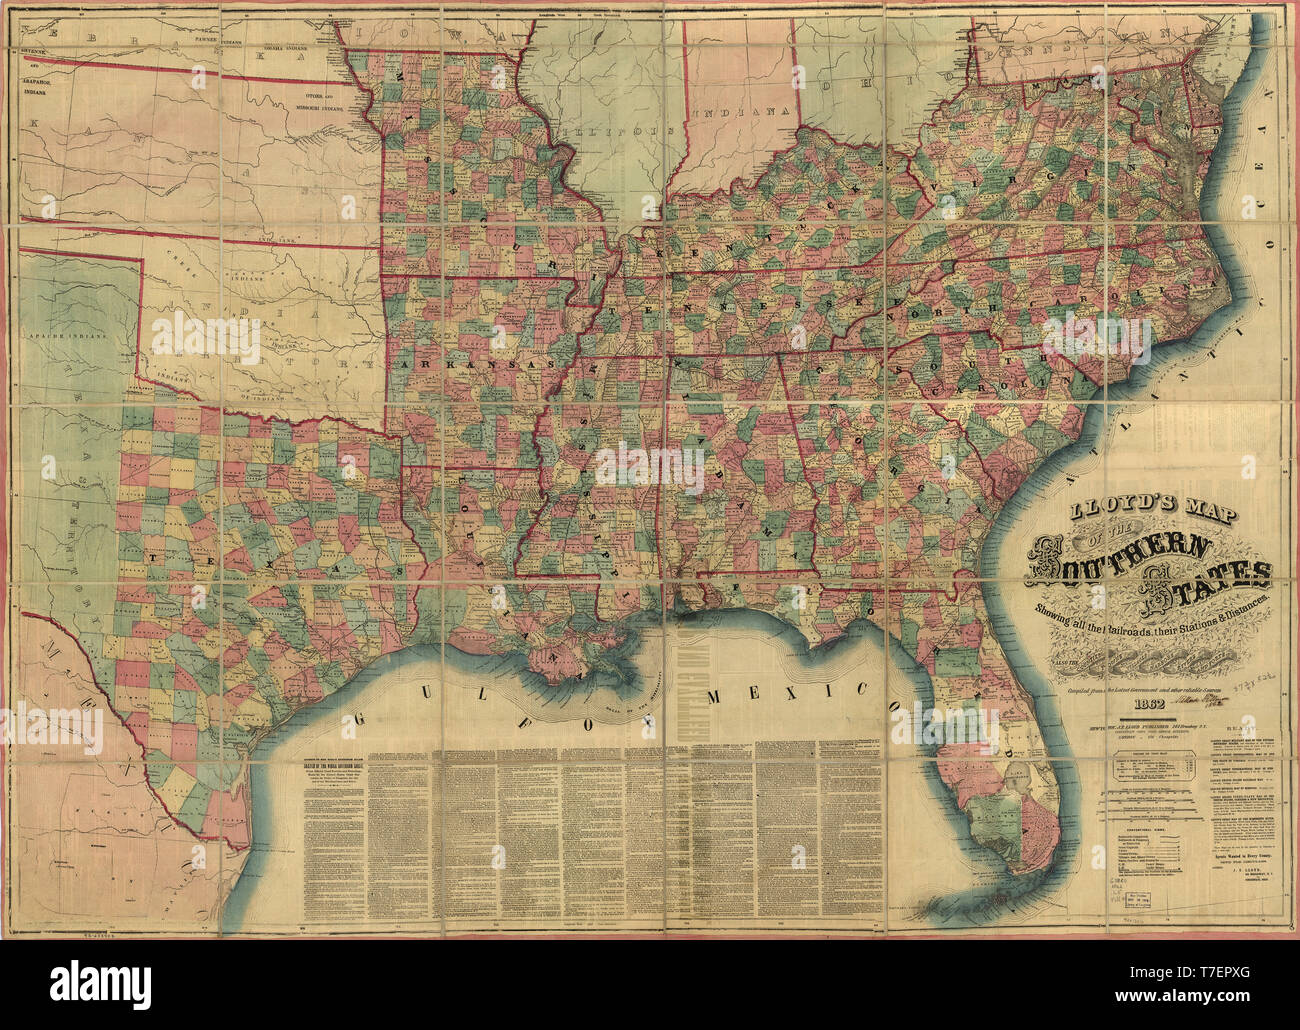 Lloyd  1862-23 x 31.80 Southern States and Railroad Stations Civil War Map 